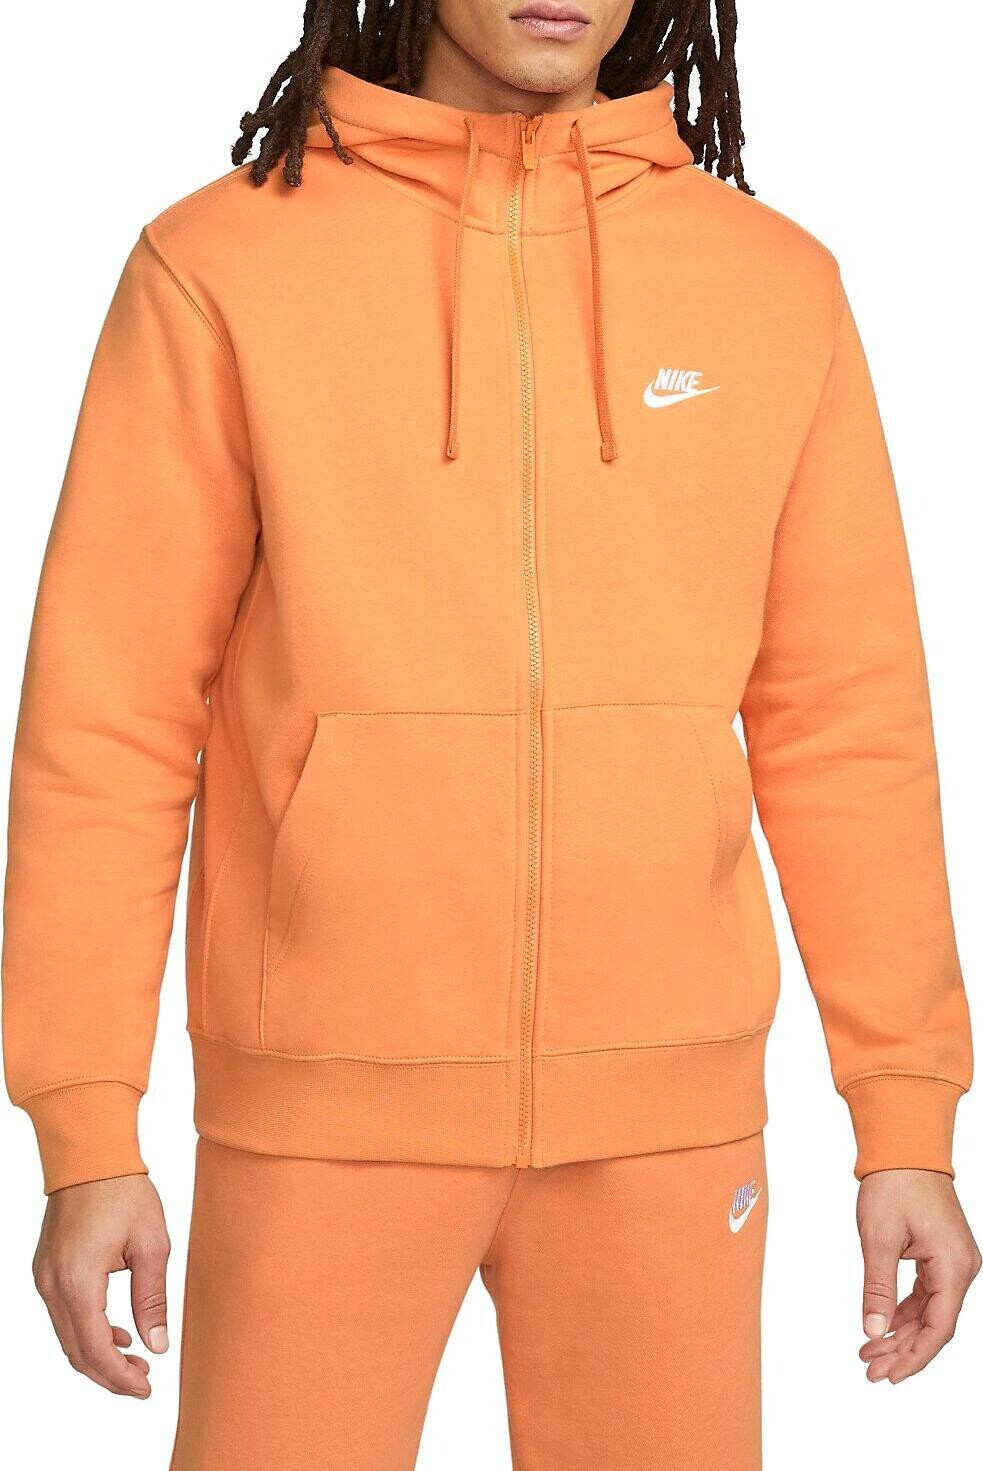 Sportswear Club Fleece Pullover Hoodie Hot Curry, Nike